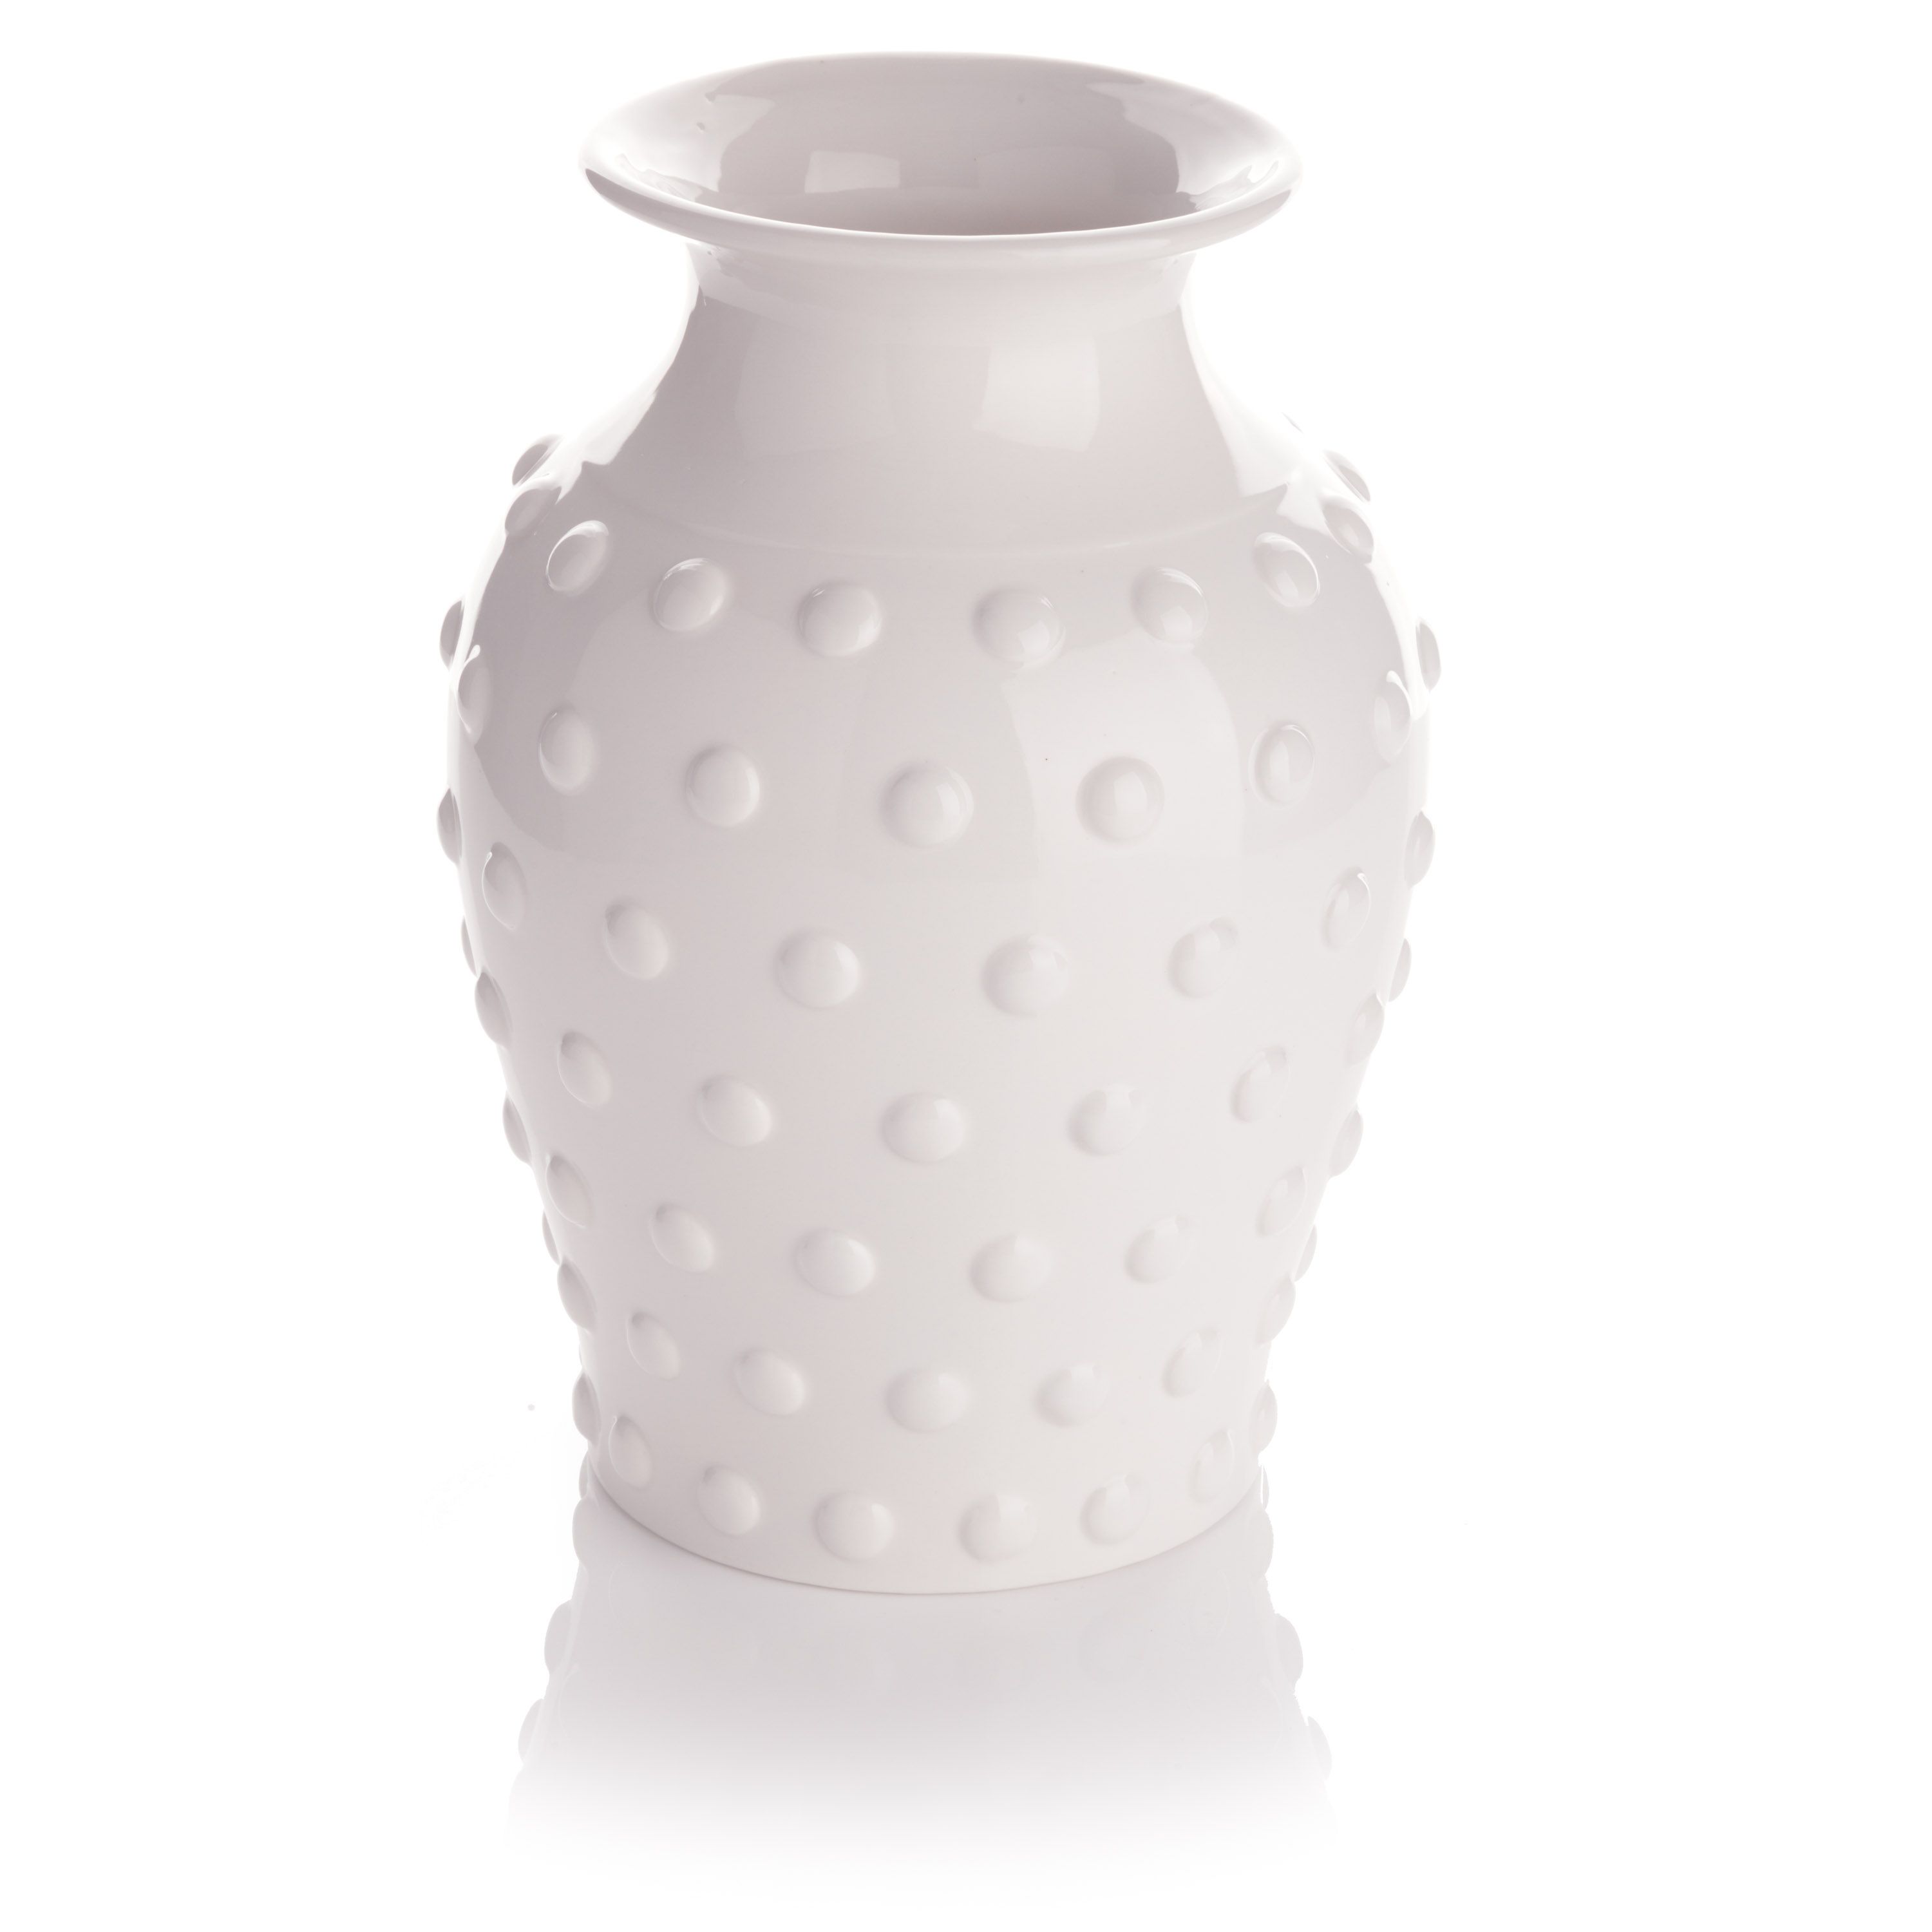 My Texas House Ceramic White Hobnail Vase, 12" | Walmart (US)